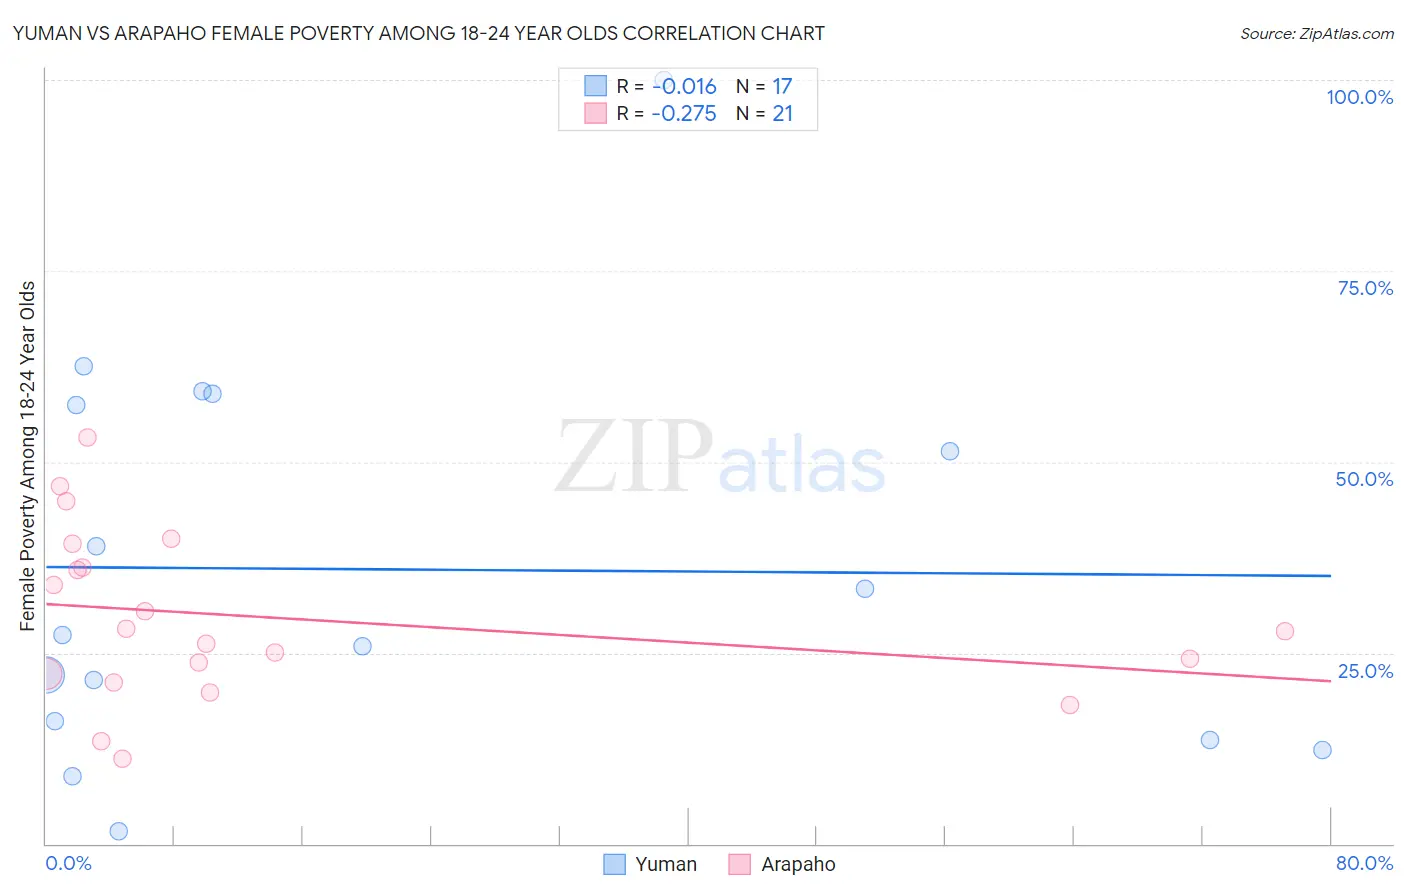 Yuman vs Arapaho Female Poverty Among 18-24 Year Olds